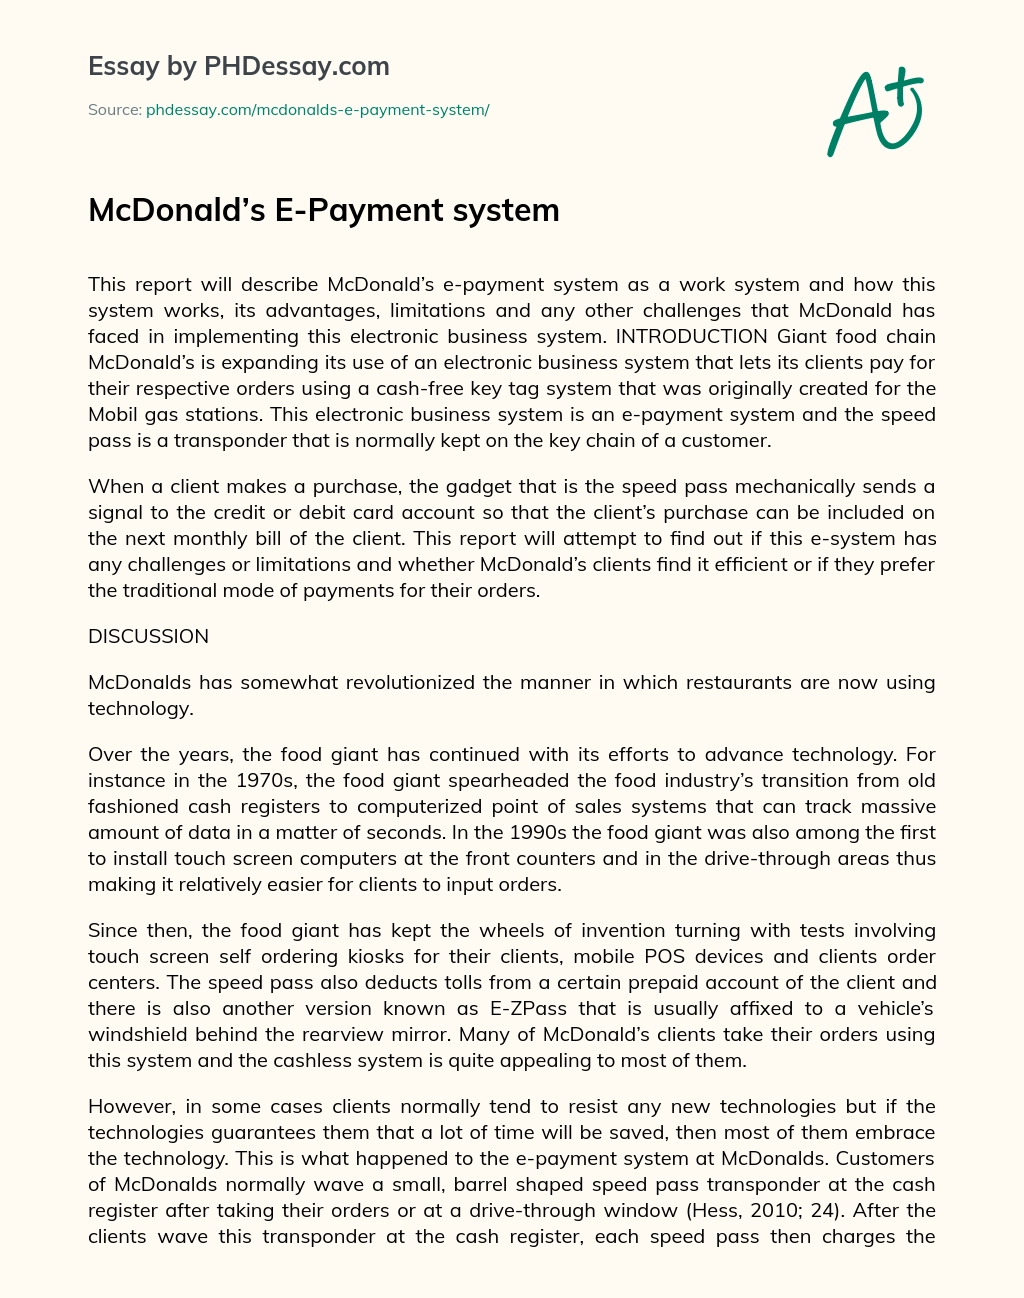 McDonald’s E-Payment system essay